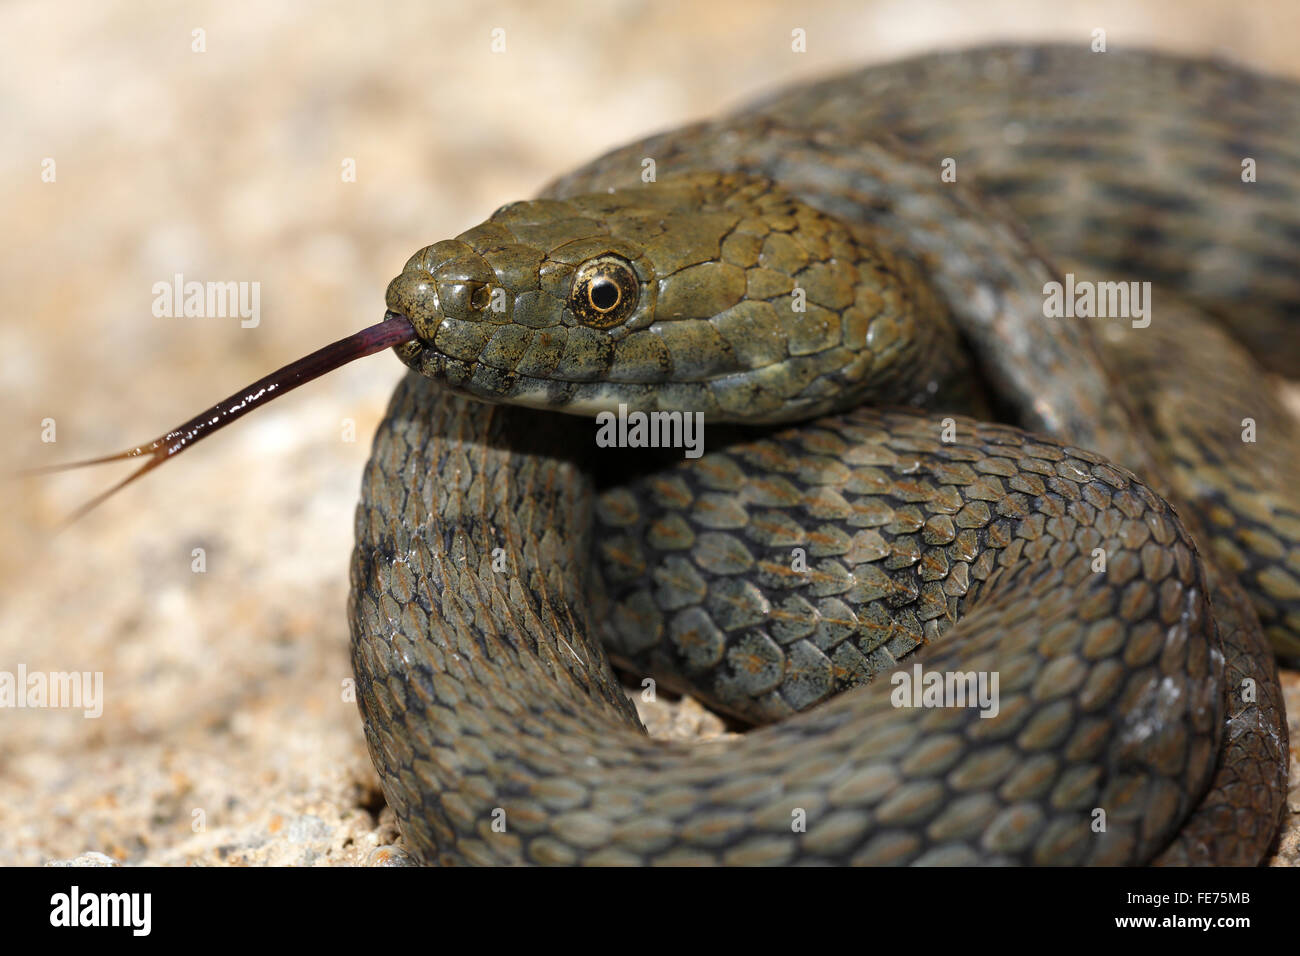 Dés Lambent (Natrix tessellata) Snake, snake Haut Balaton, Parc National, le lac Balaton, Hongrie Banque D'Images